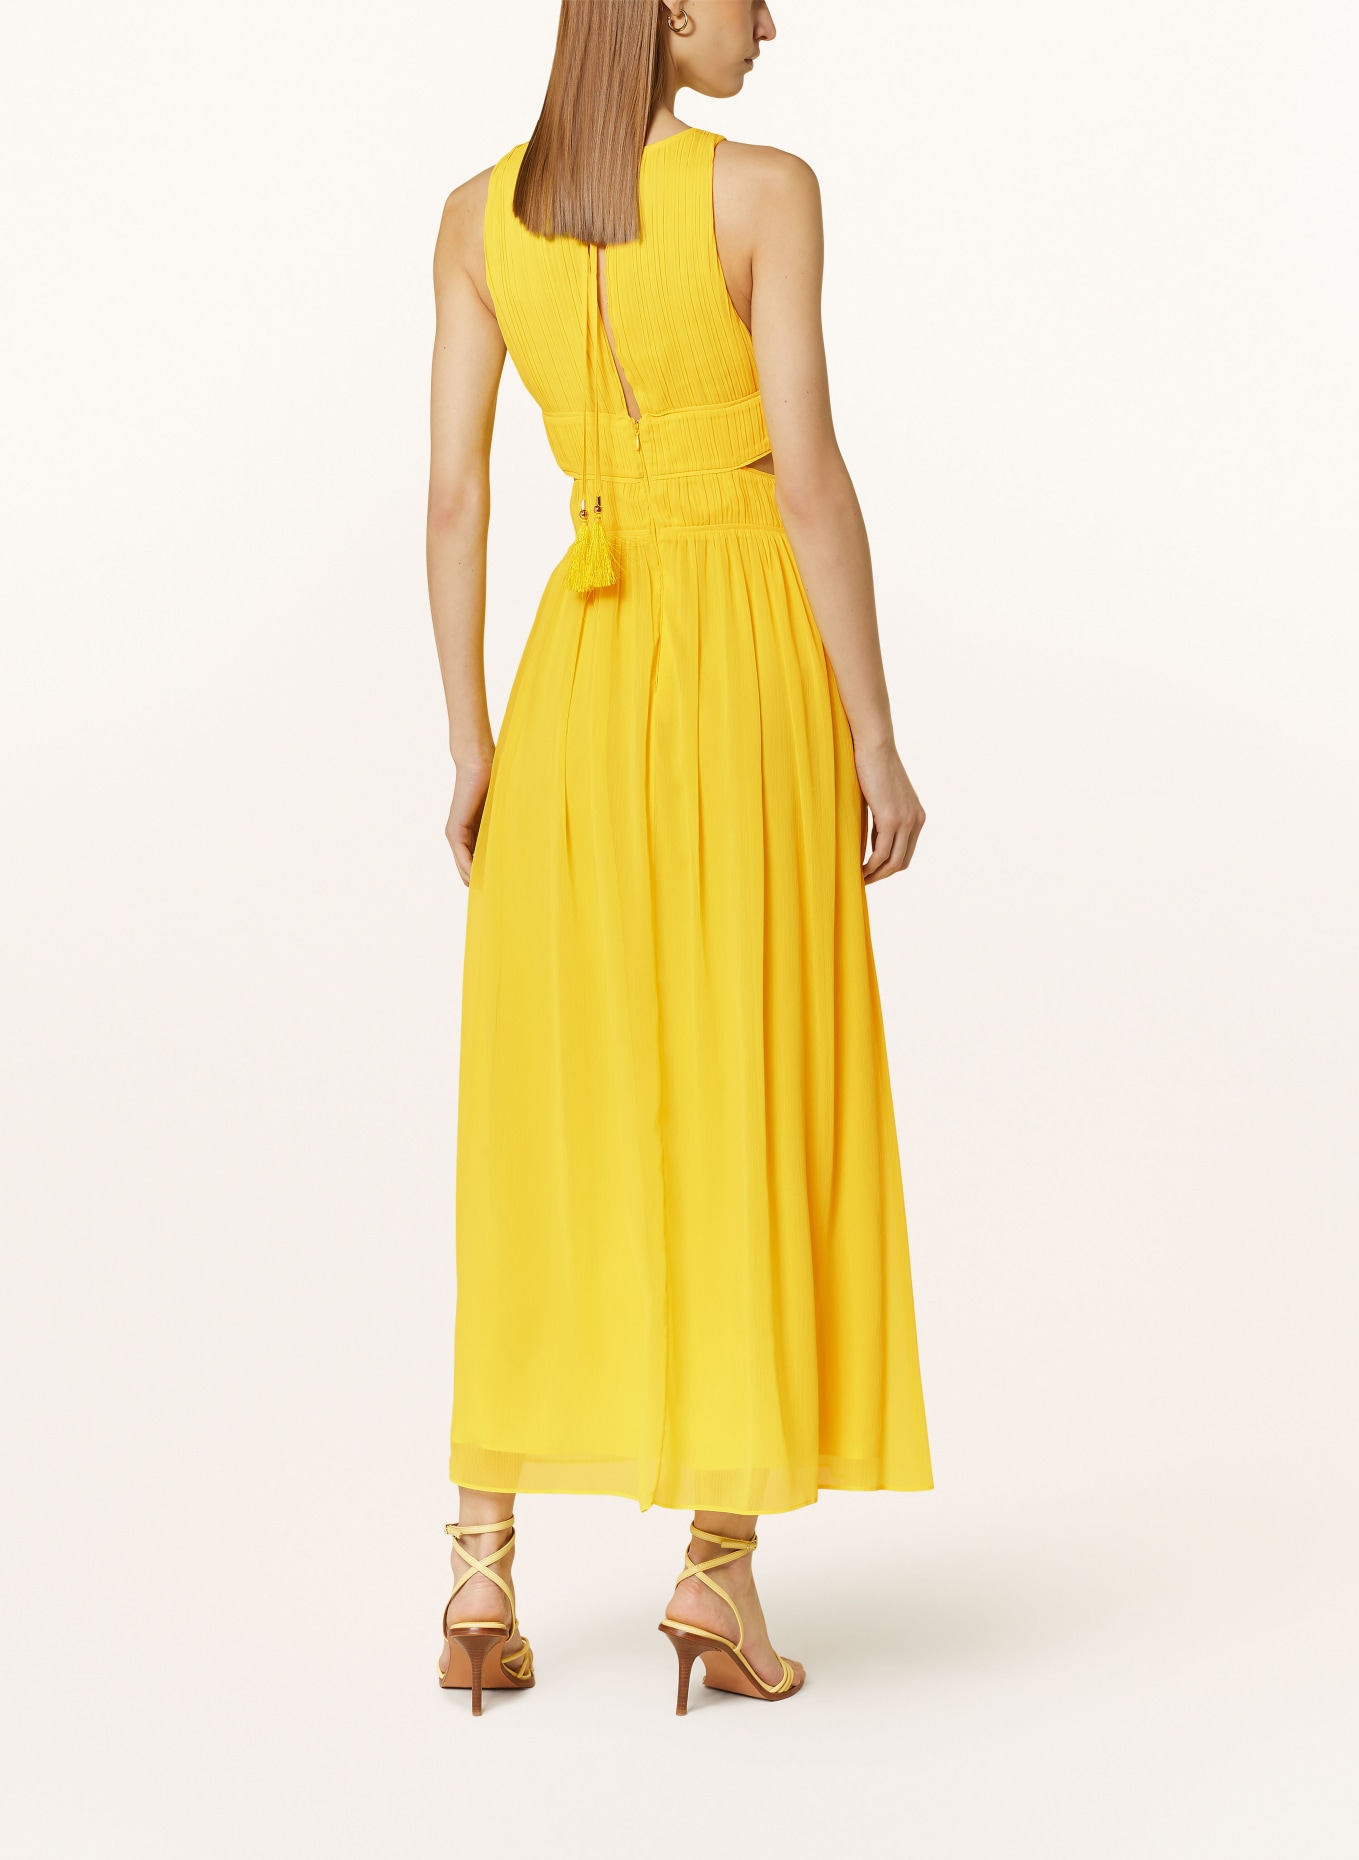 PATRIZIA PEPE Kleid mit Plissees und Cut-outs, Farbe: Y447 DYNAMIC YELLOW (Bild 3)